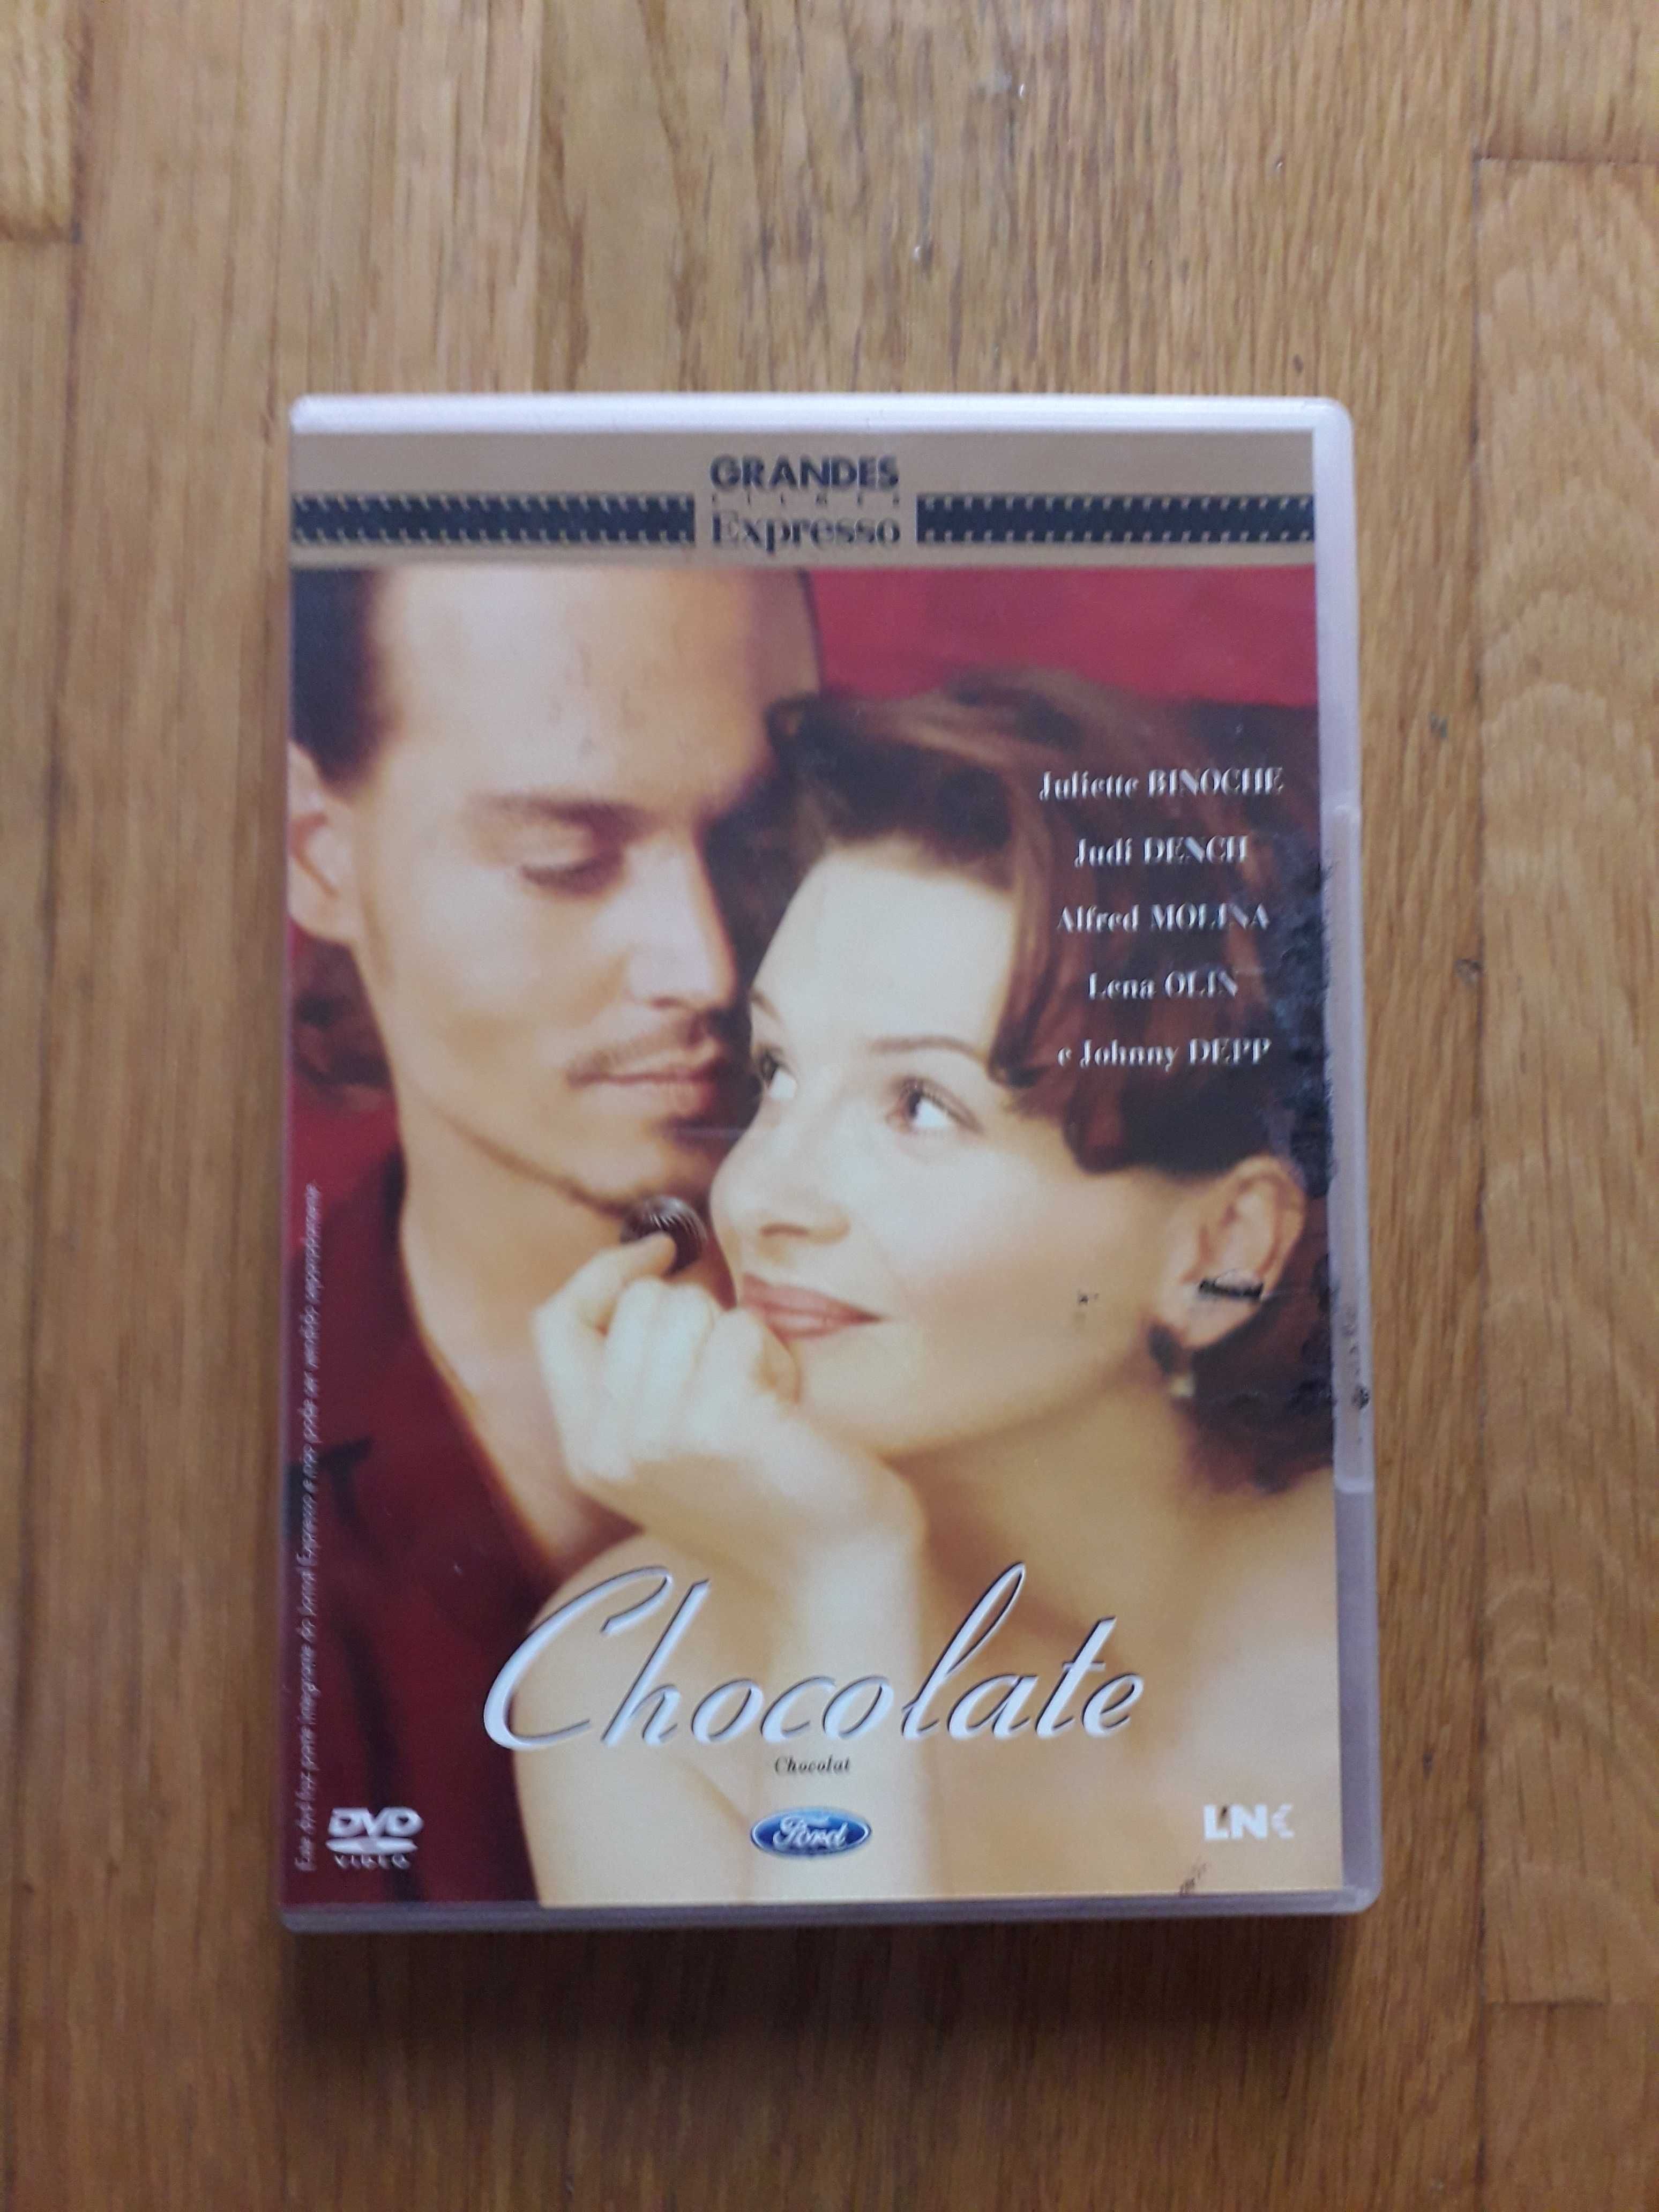 DVD "Chocolate" de Lasse Hallström (portes incluídos)